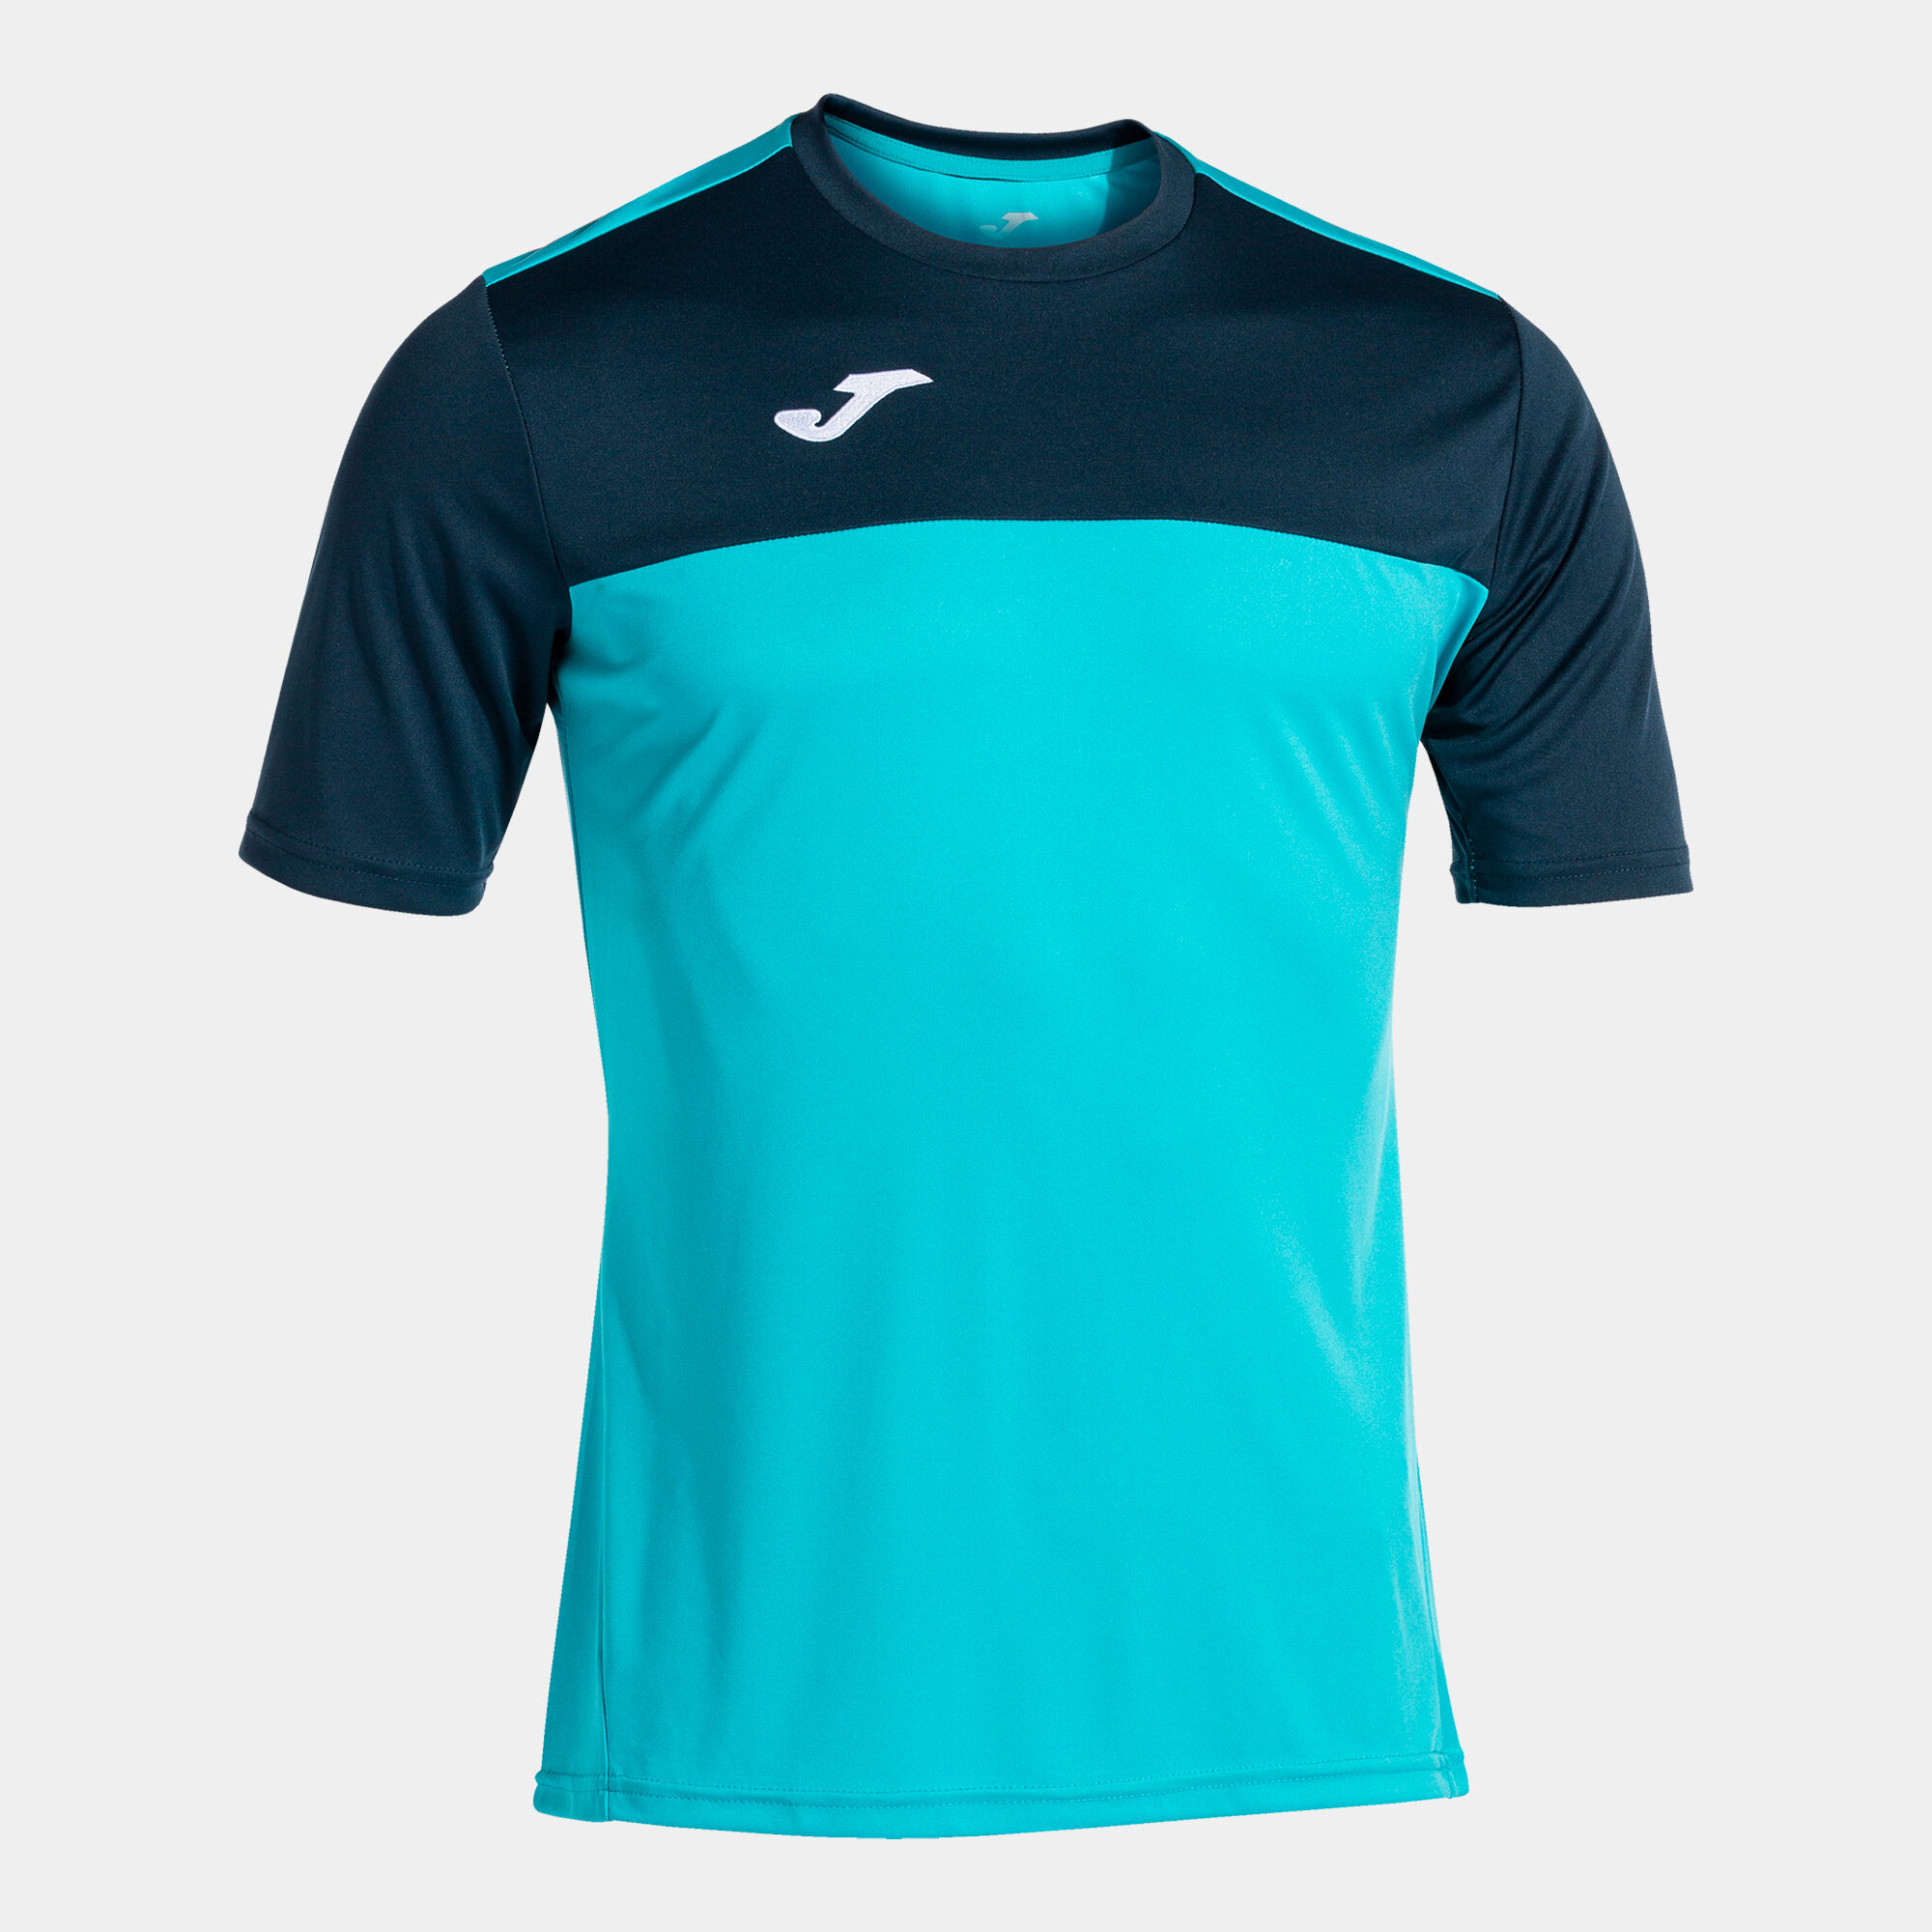 Shirt short sleeve man Winner fluorescent turquoise navy blue